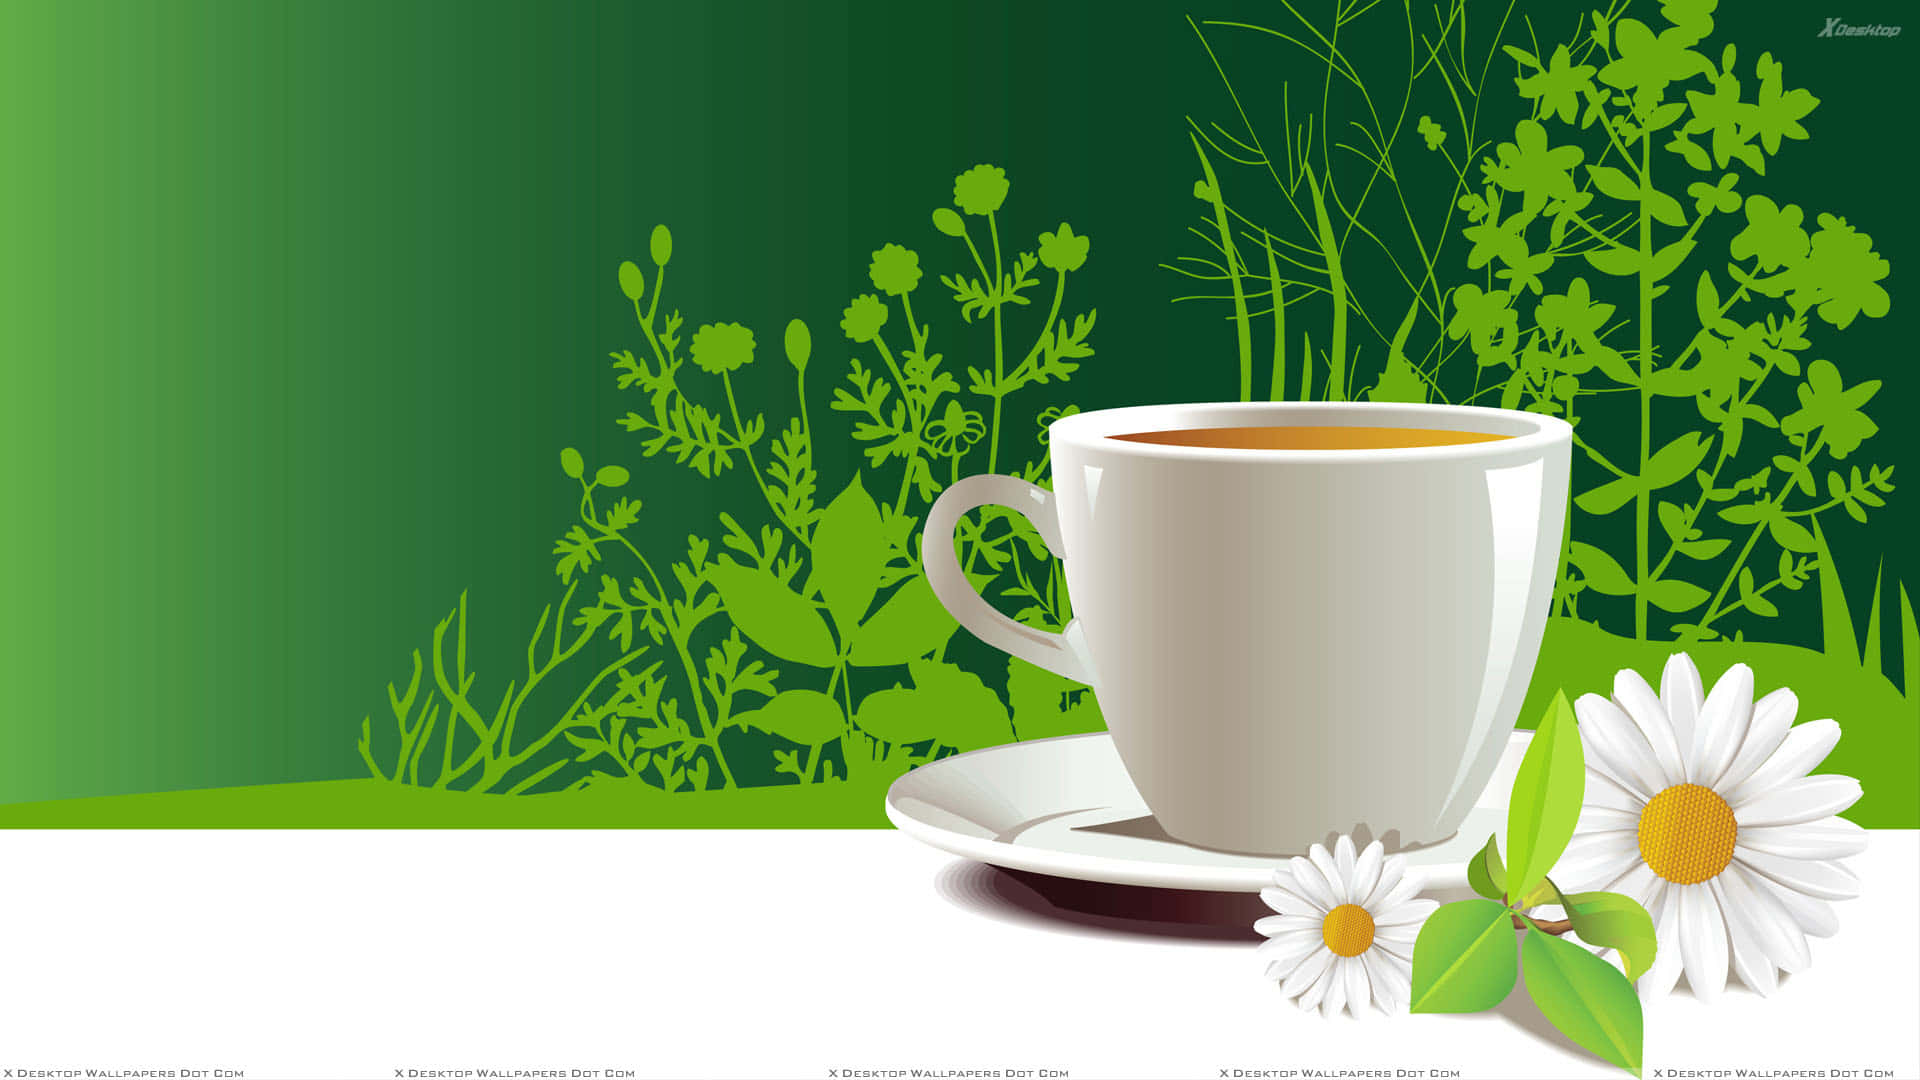 Tea Cup Digital Art Picture